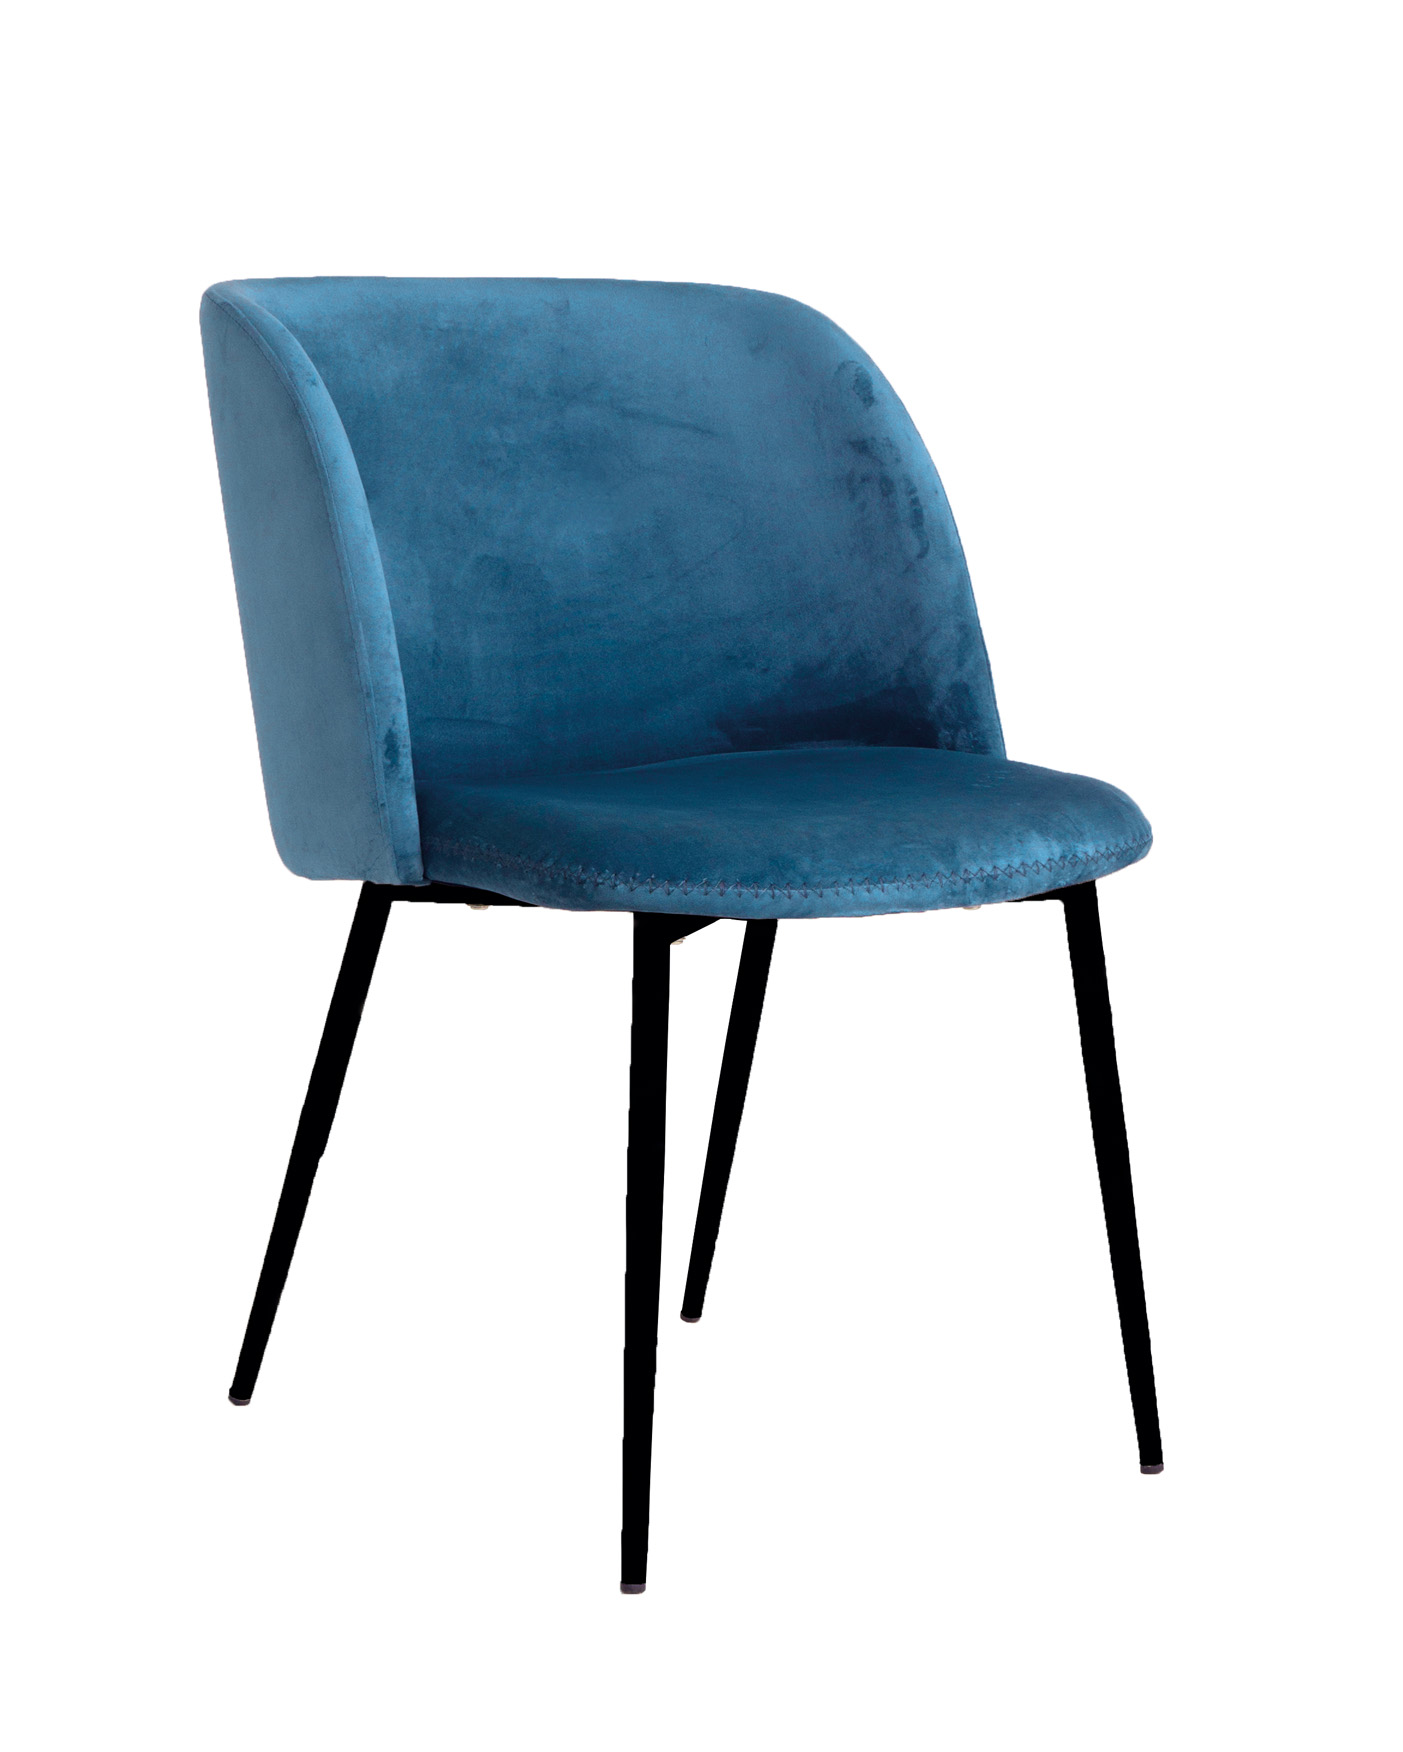 Design-Stuhl SOAZIG | Samt-Velours aqua-blau | Beine Metall schwarz 